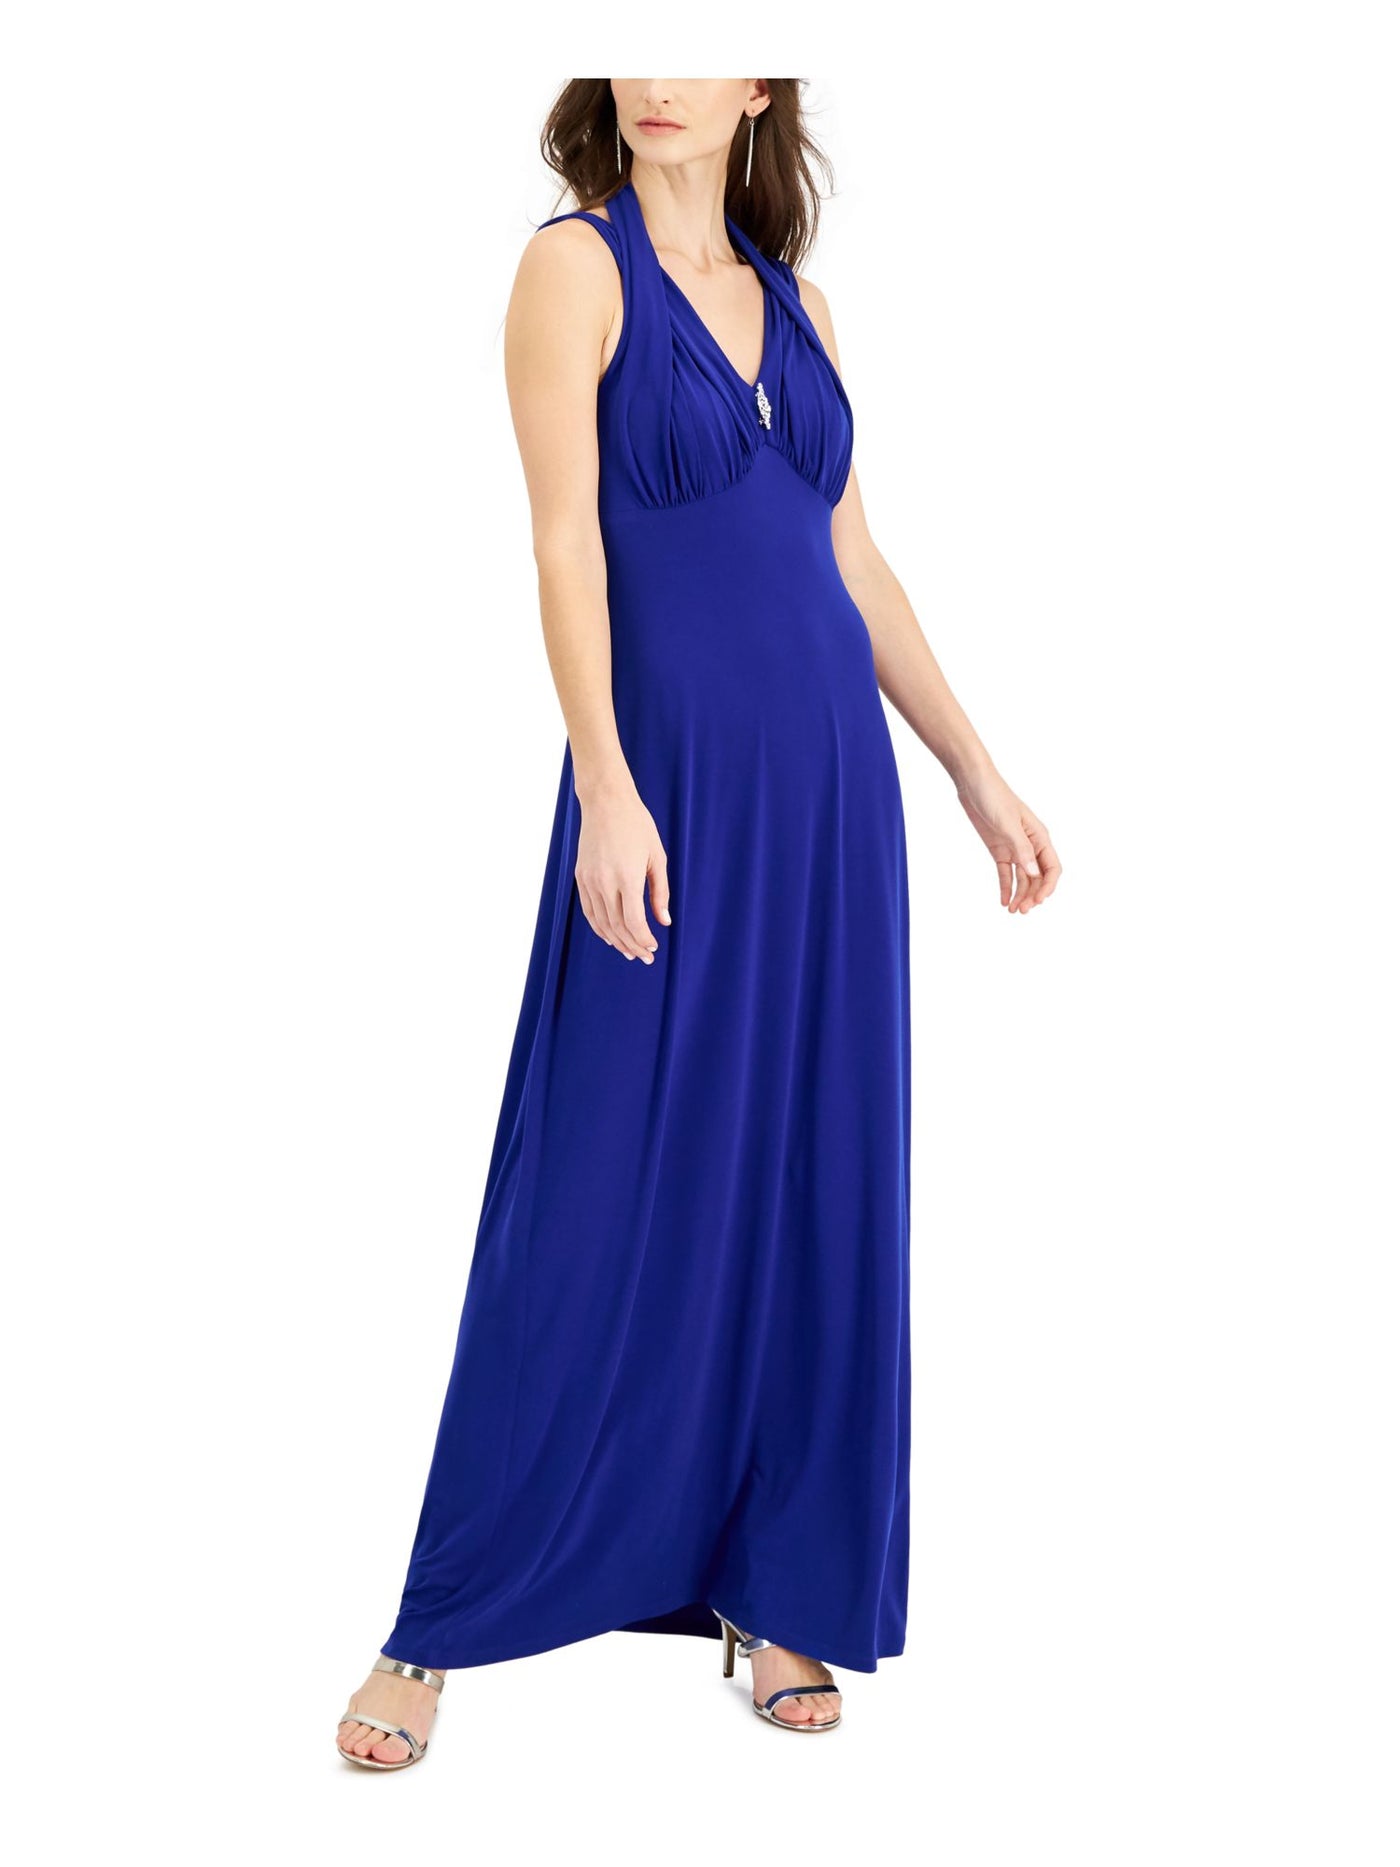 CONNECTED APPAREL Womens Blue Sleeveless Halter Full-Length Evening Gown Dress 12